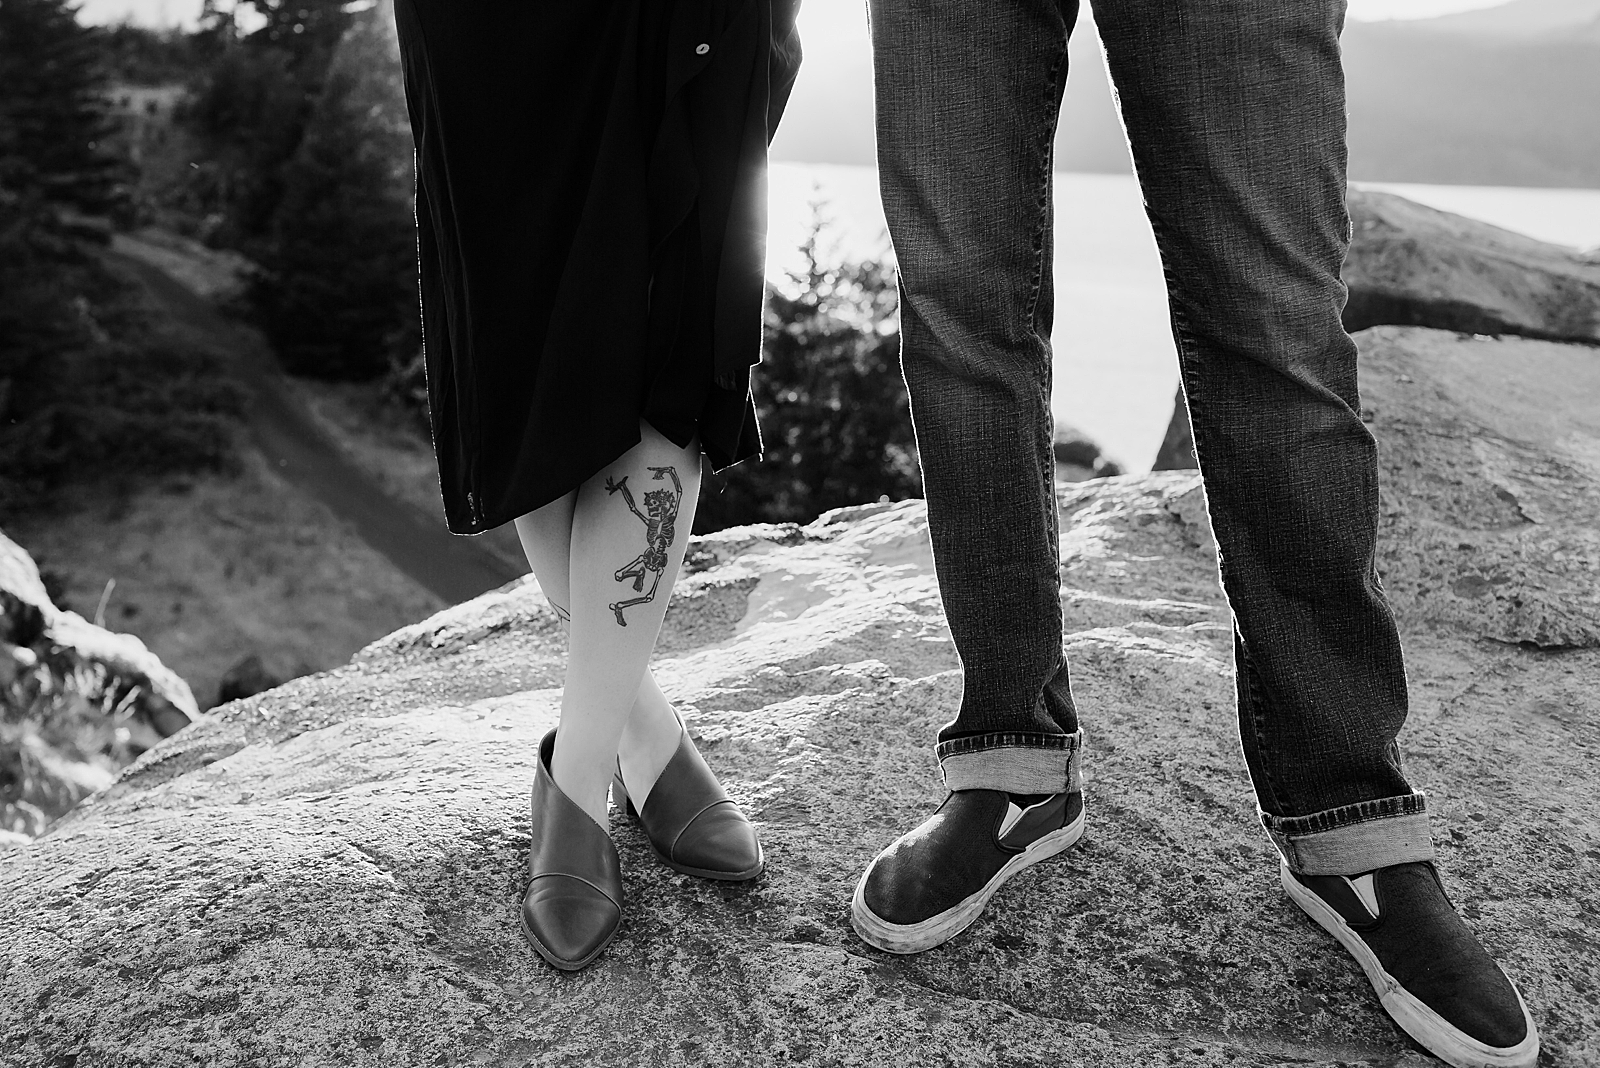 B&W closeup of couples shoes